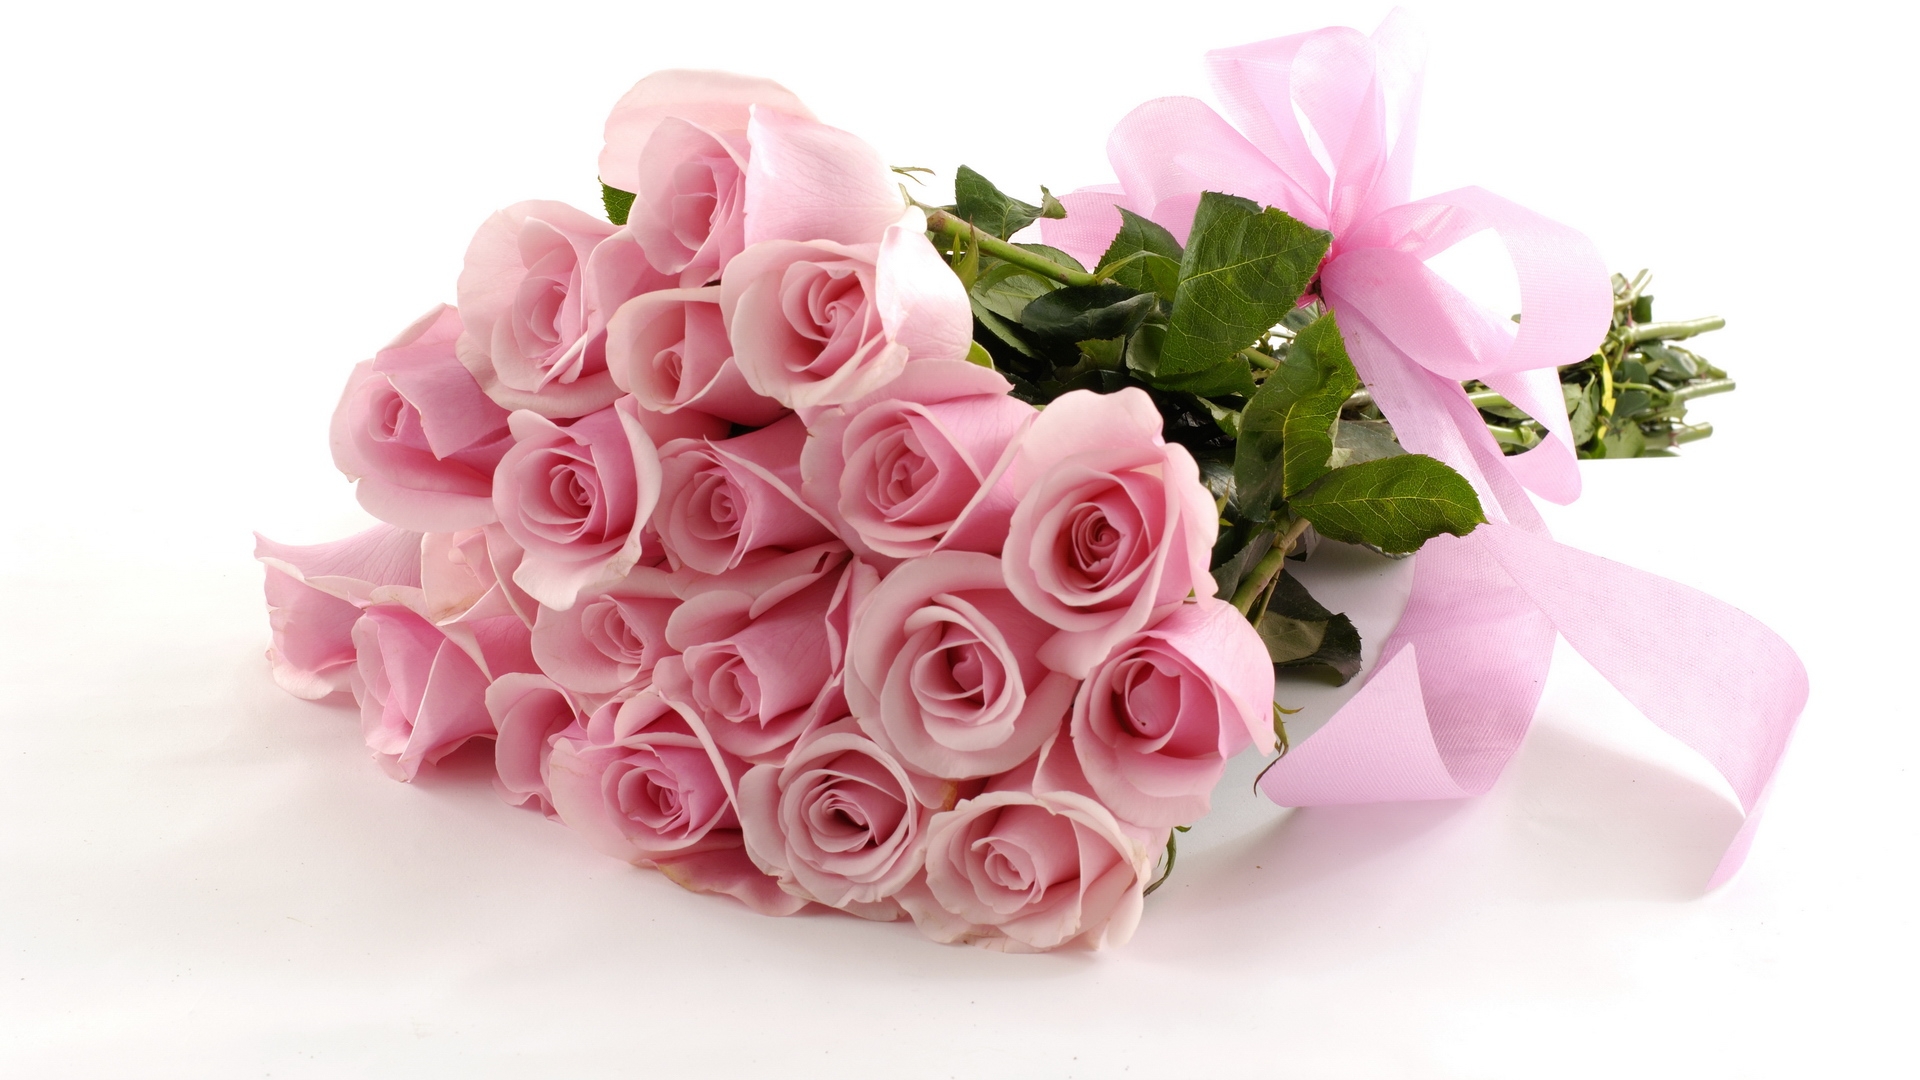 Саяногорск Инфо - holidays___international_womens_day_beautiful_pink_bouquet_as_a_gift_on_march_8_057093_.jpg, Скачано: 1101